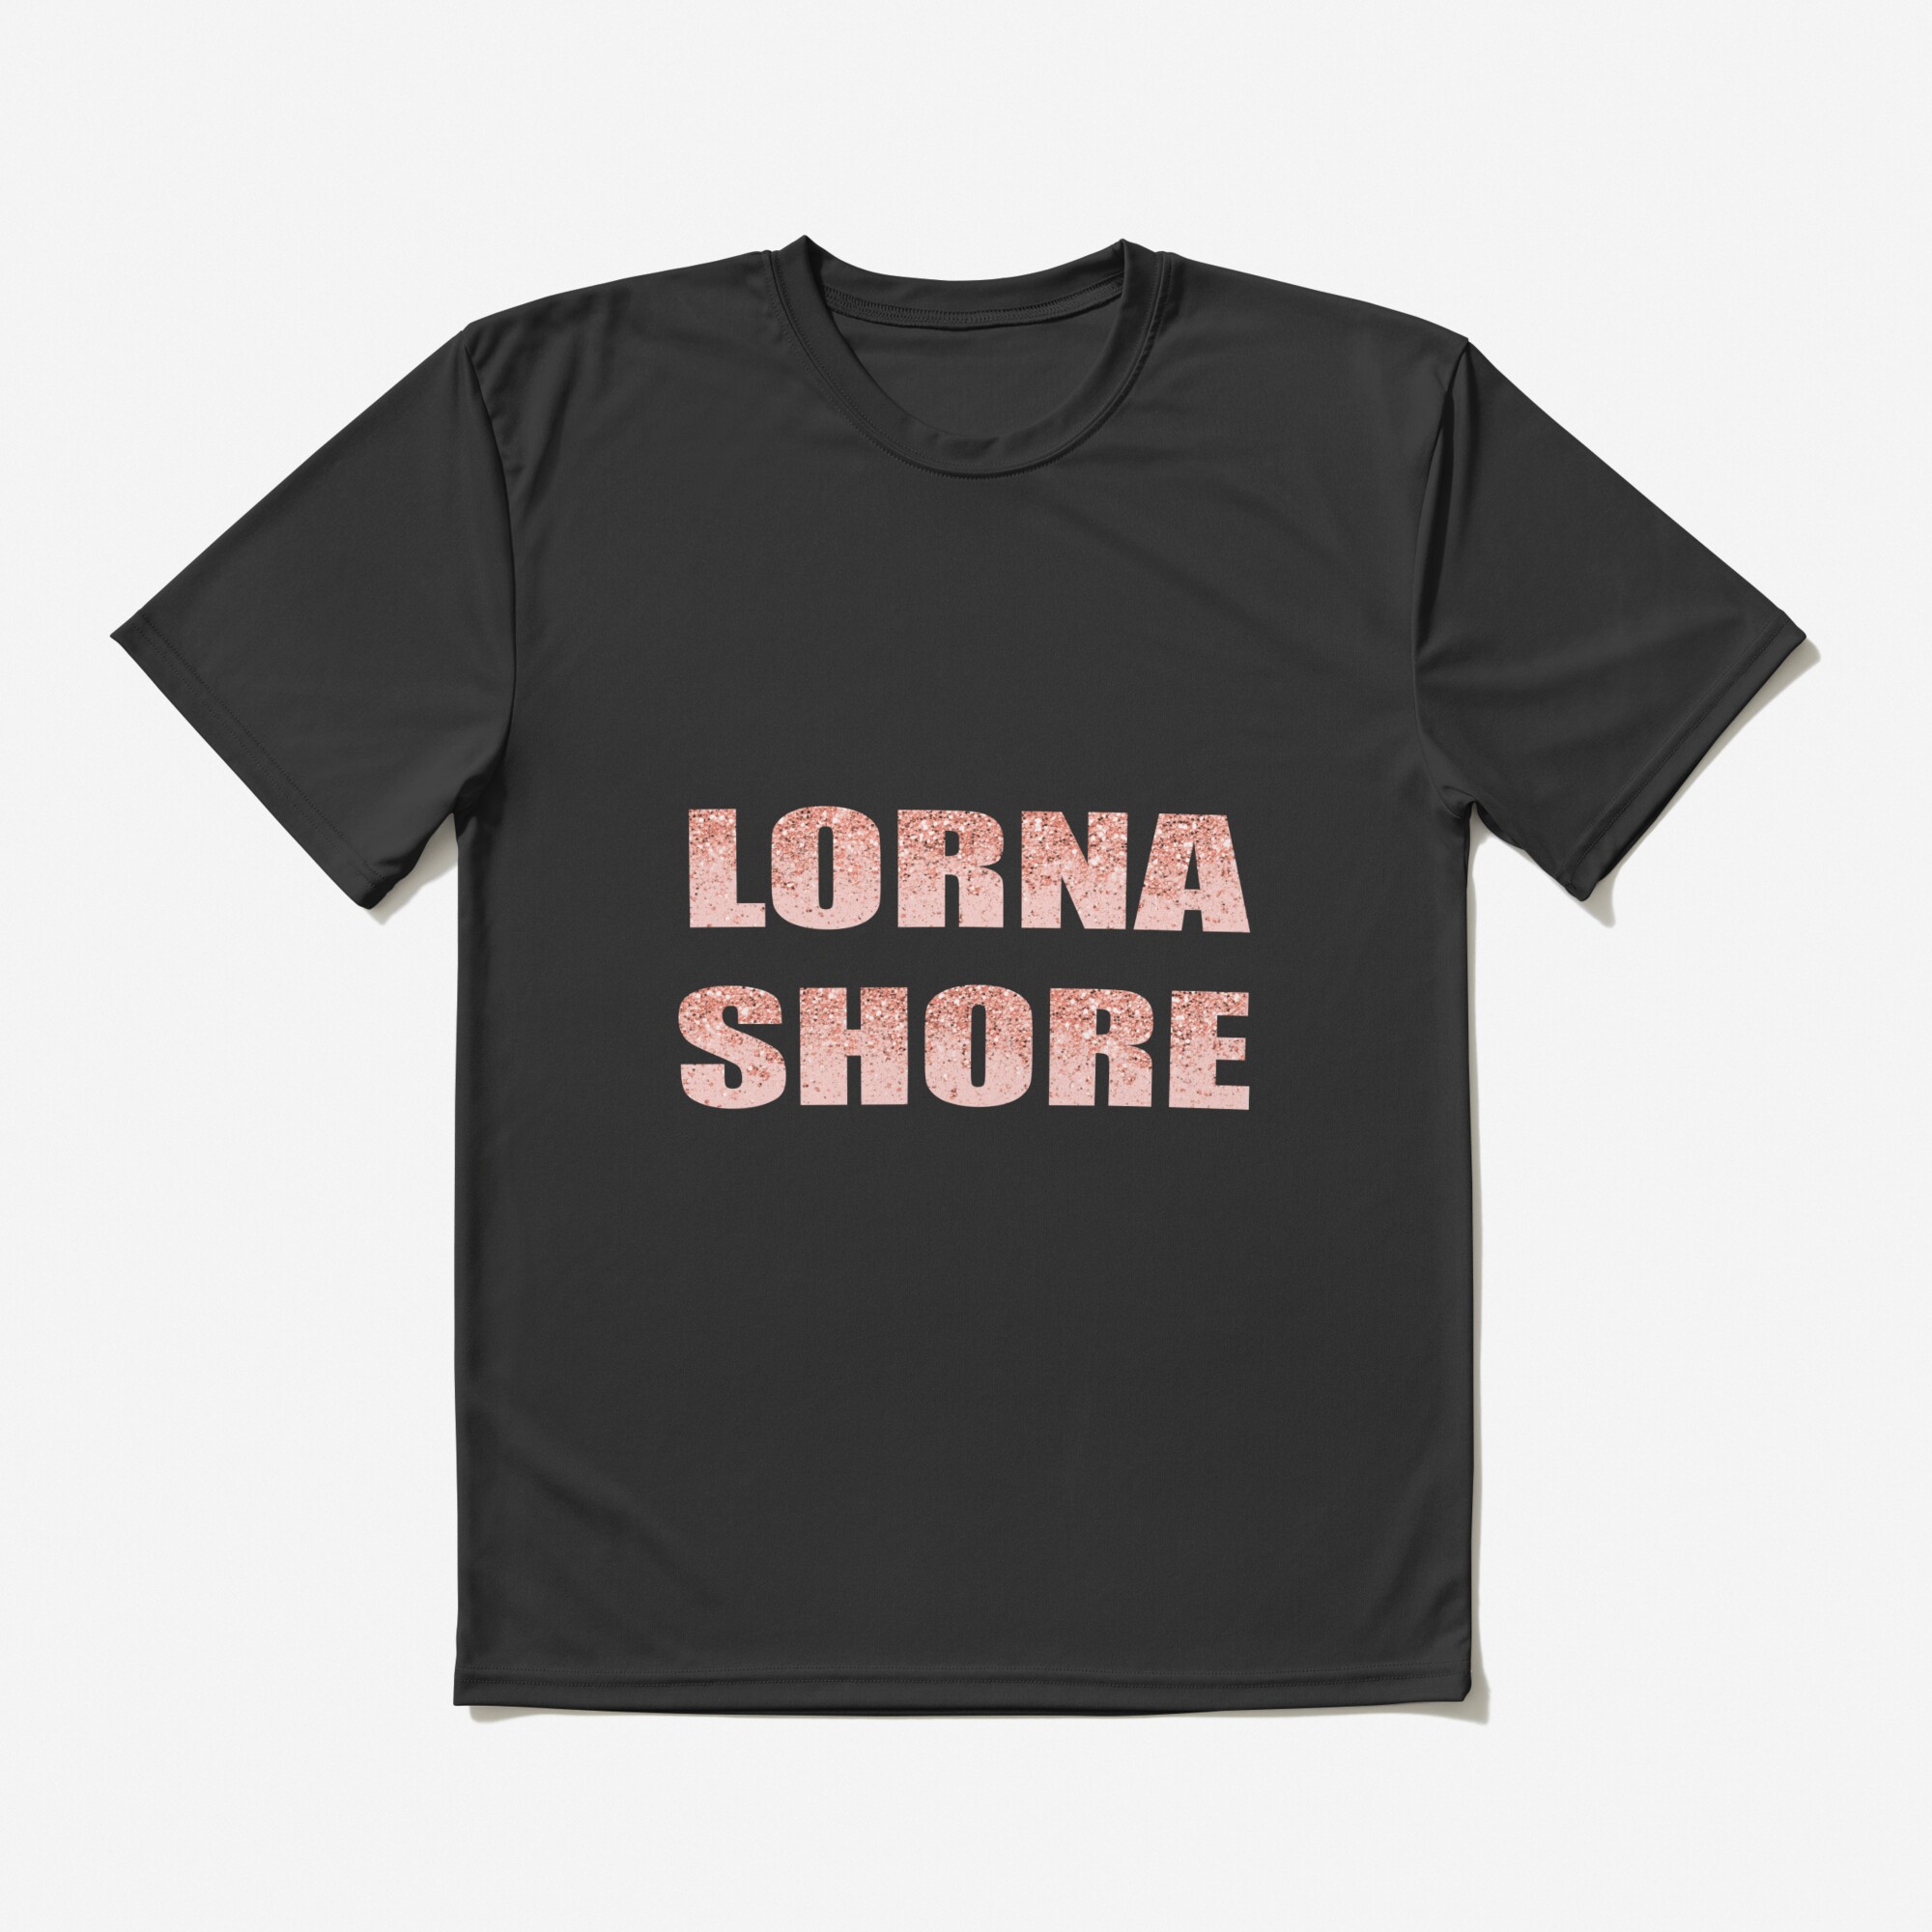 ssrcoactive tshirtflatlay10101001c5ca27c6frontsquare2000x2000 16 - Lorna Shore Shop